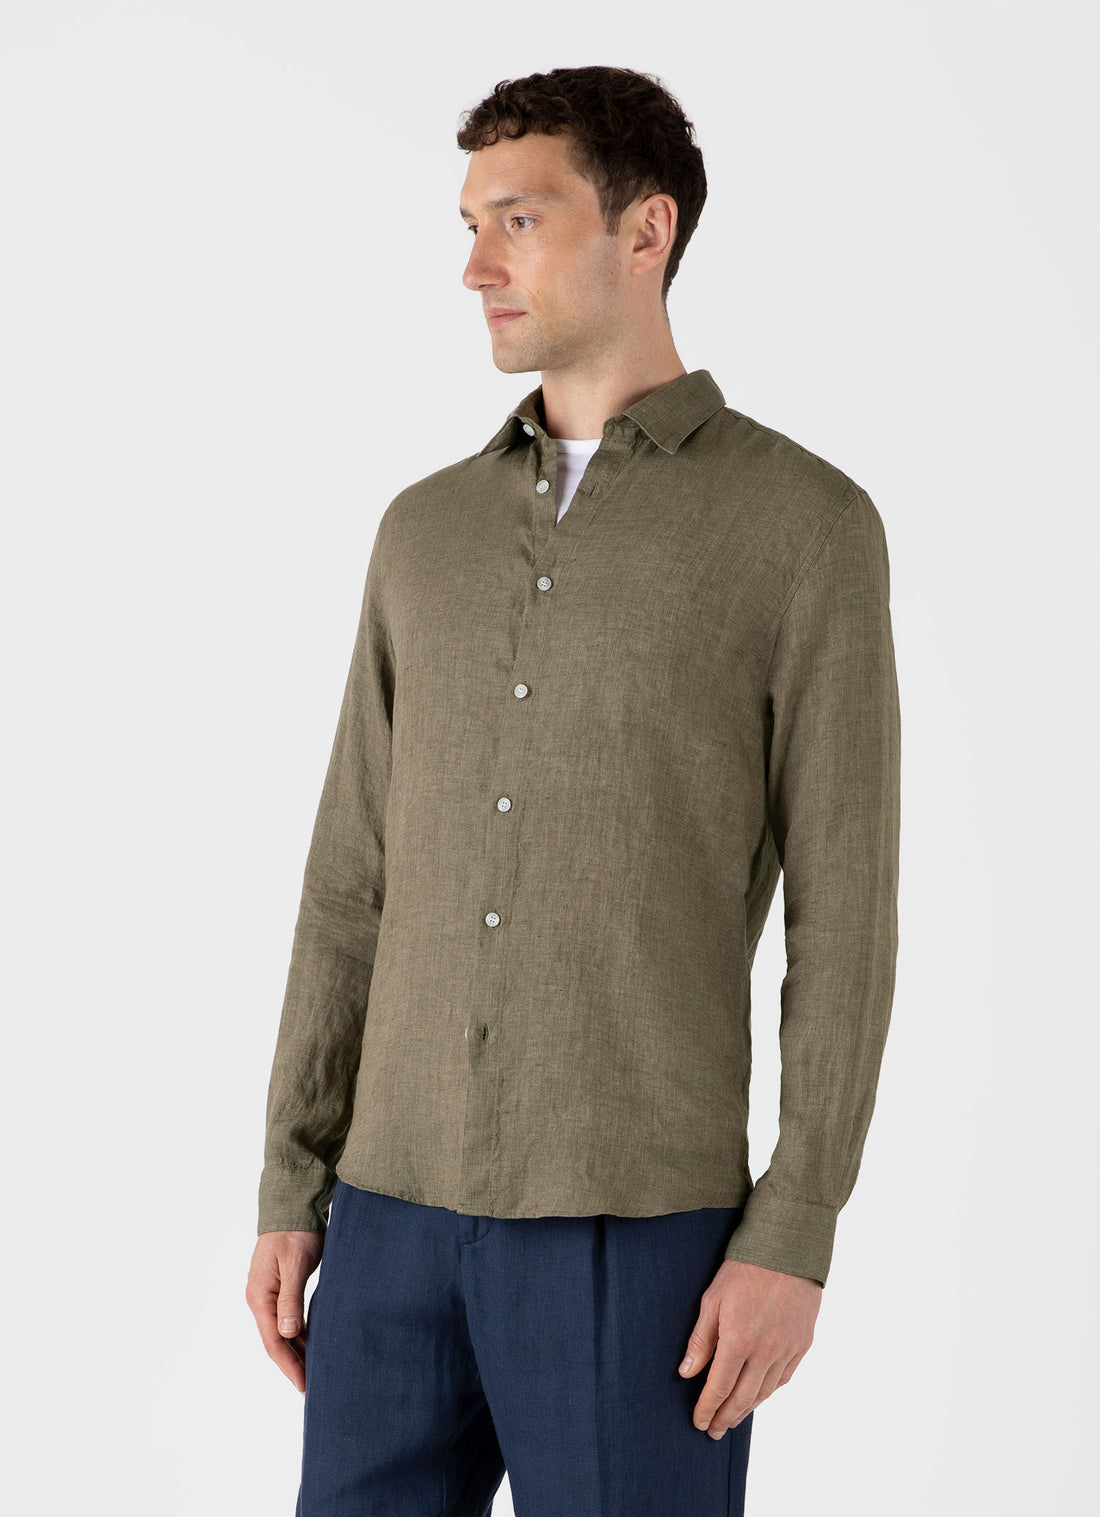 Men's Linen Shirt in Khaki